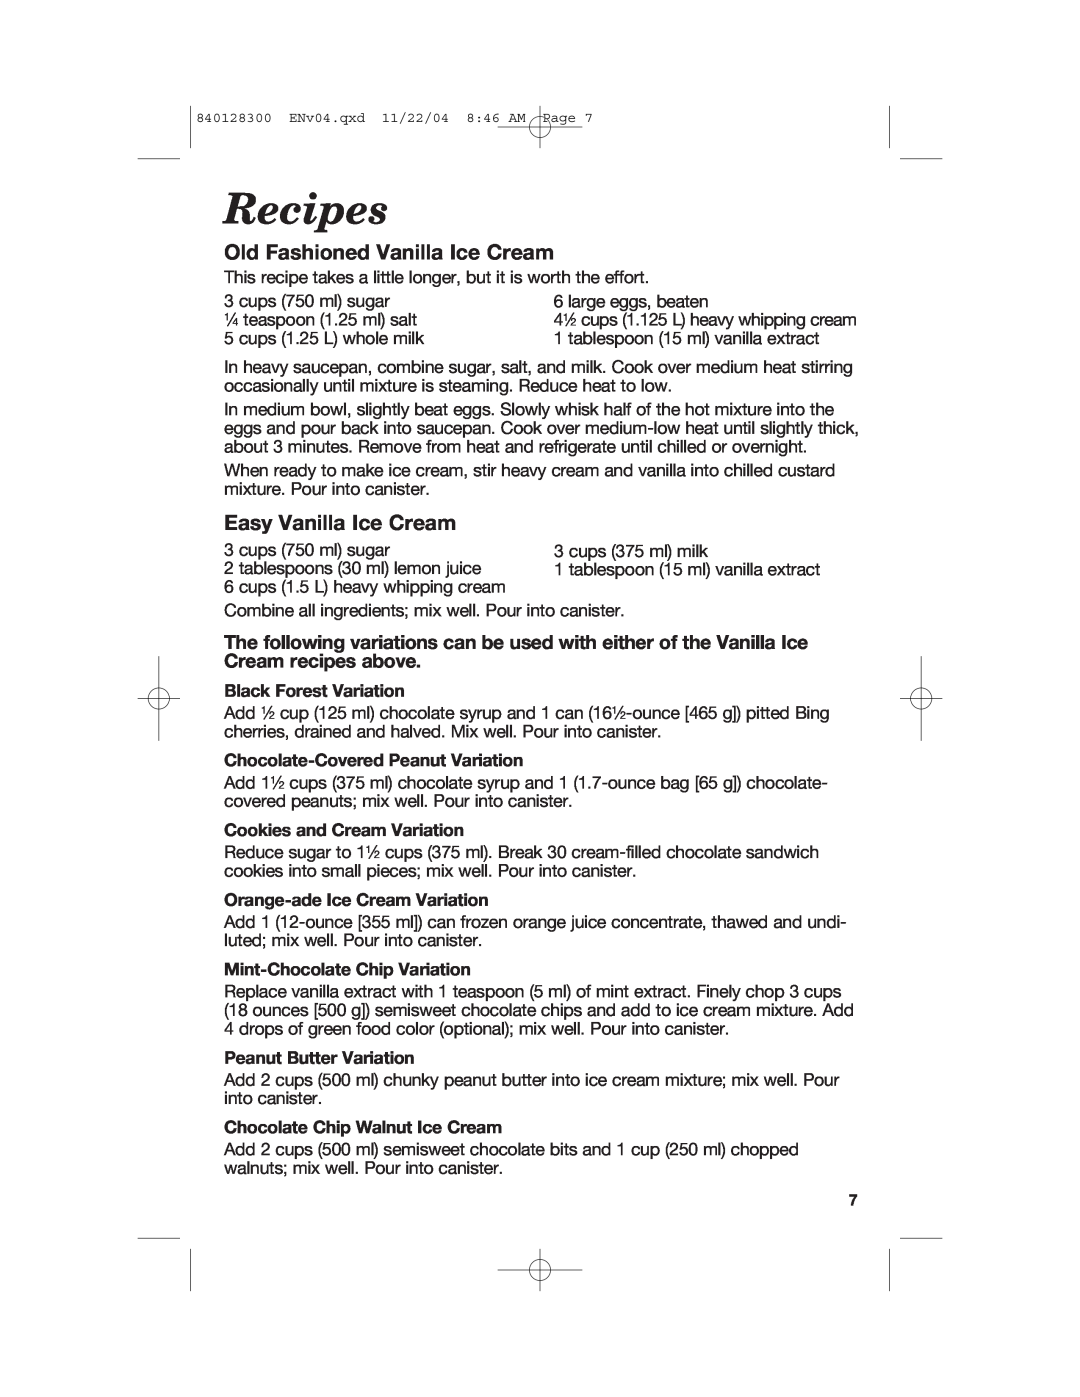 Hamilton Beach 68330 manual Recipes, Old Fashioned Vanilla Ice Cream, Easy Vanilla Ice Cream, Black Forest Variation 